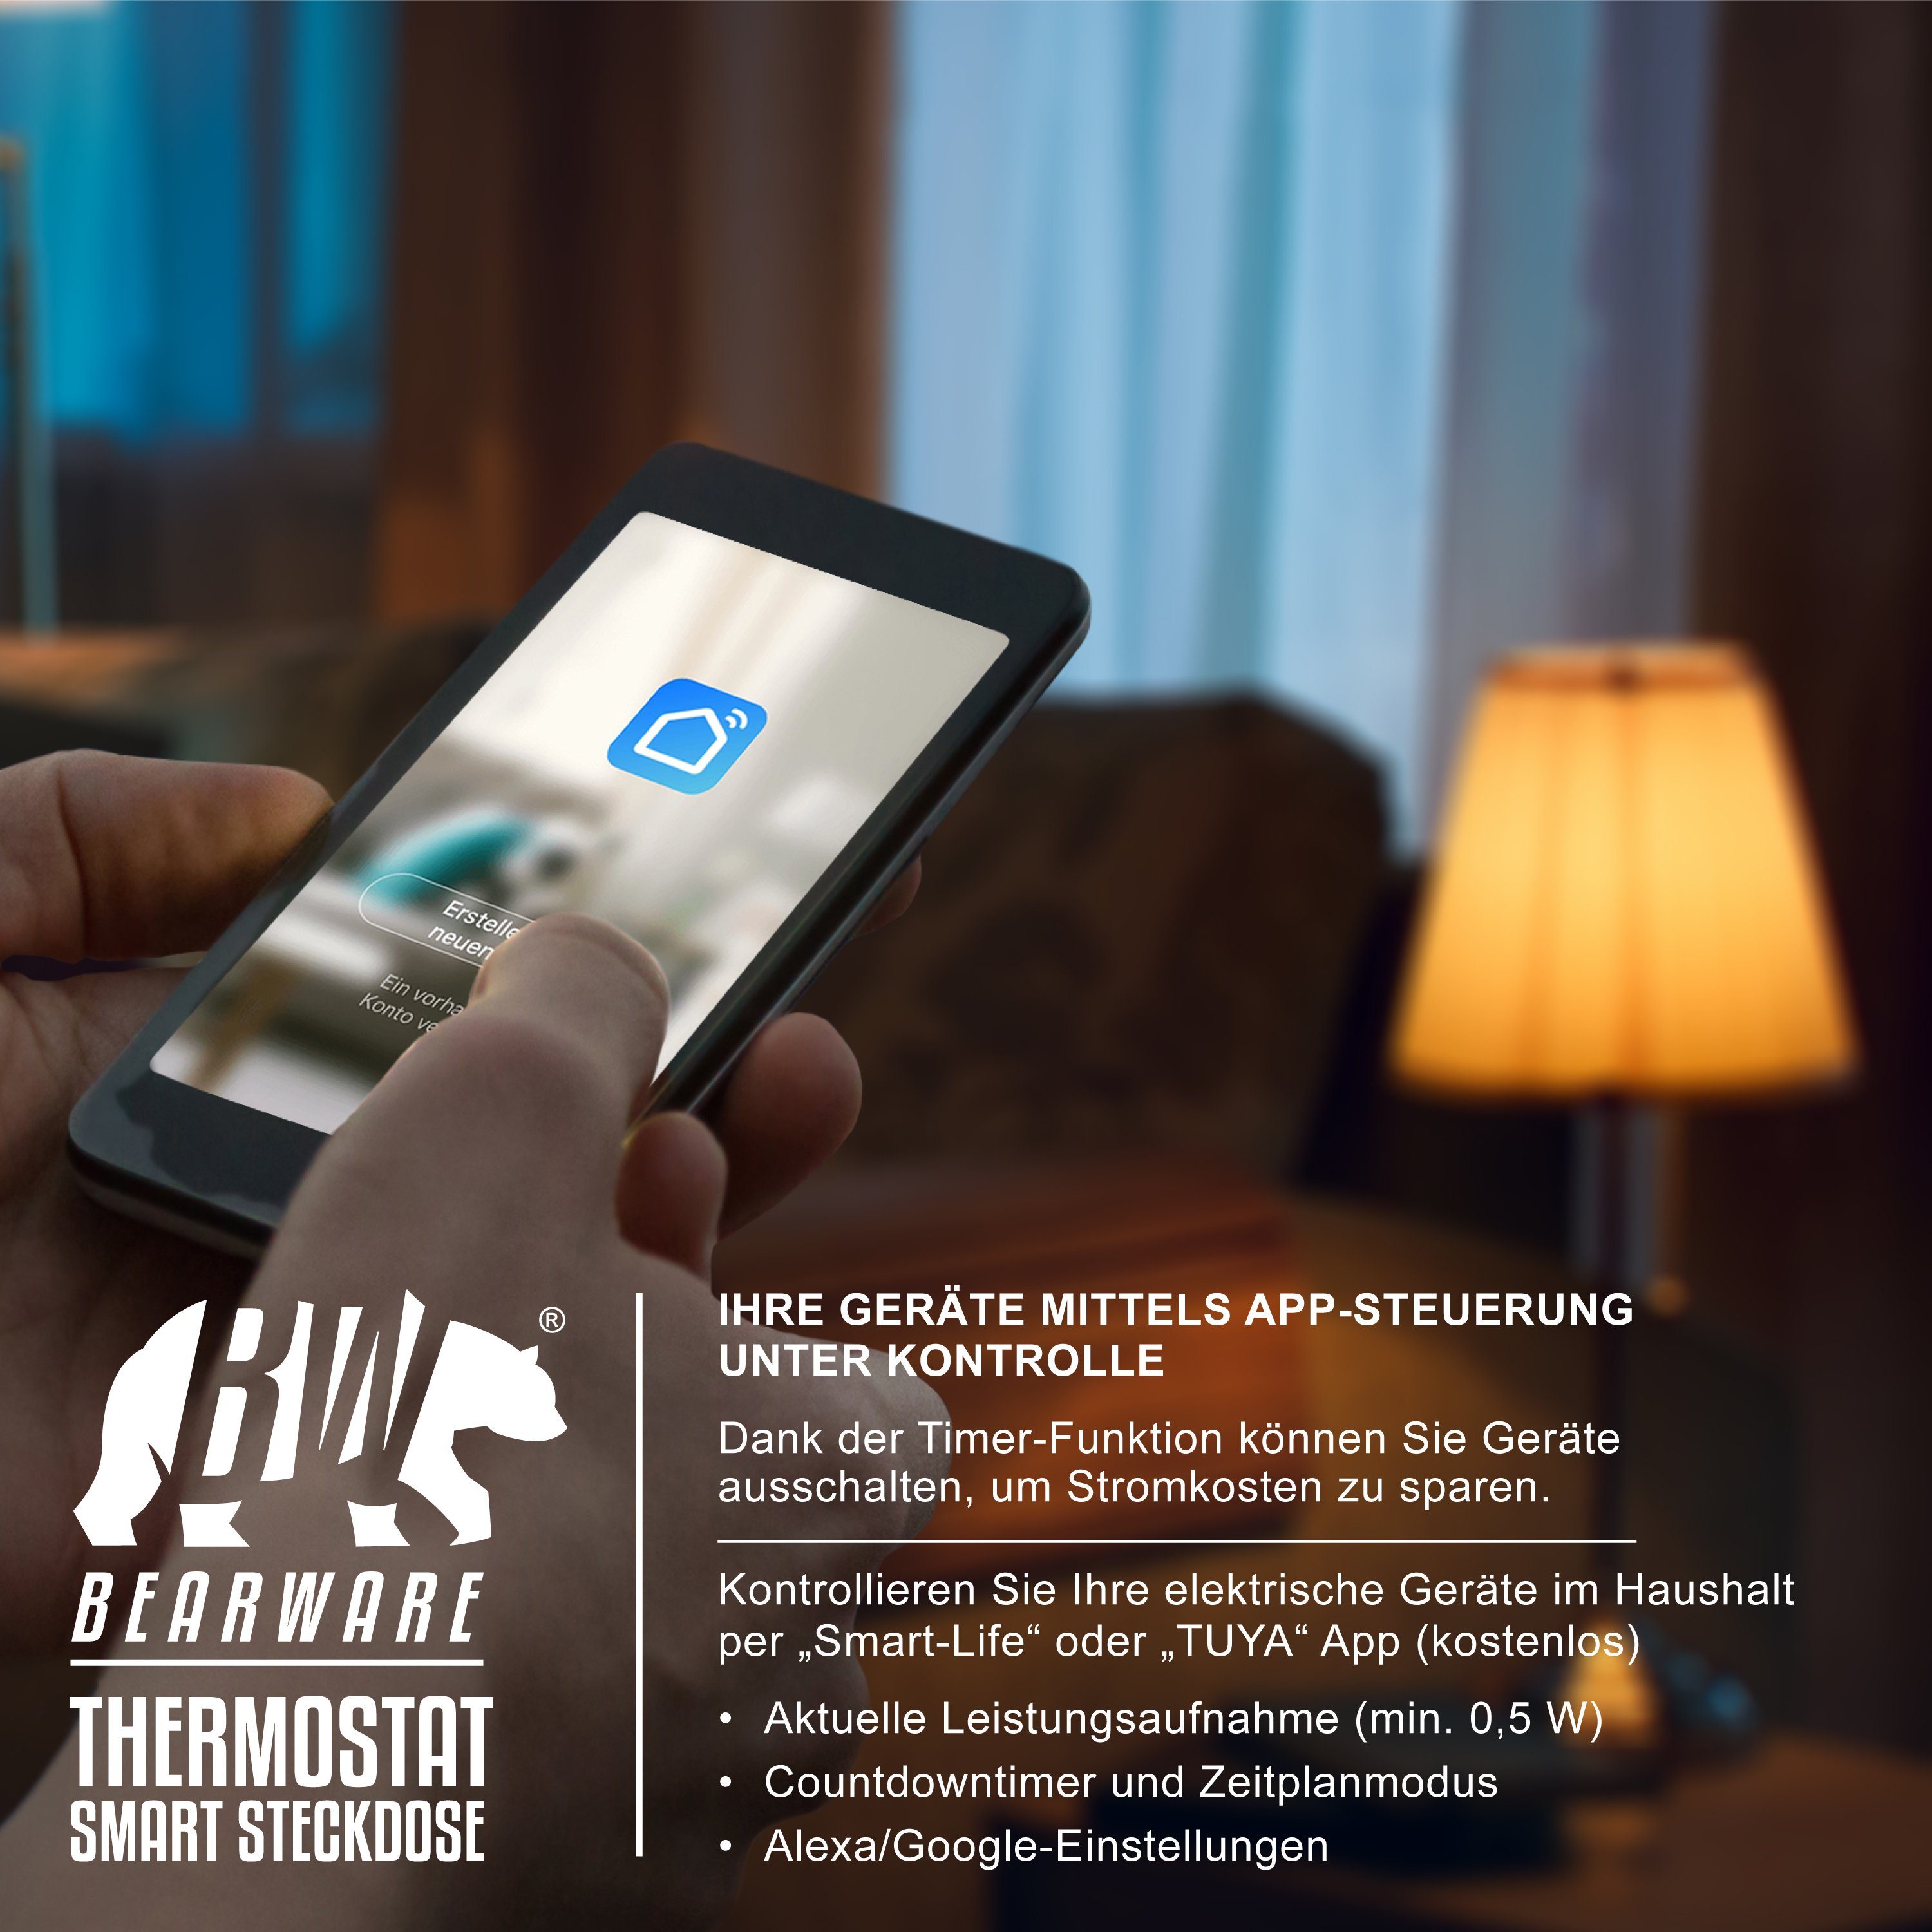 Life, WiFi 5°-35° Steckdosen-Thermostat, für BEARWARE Steckdosenthermostat, WLAN max. W, Heizgeräte, Smart 3680